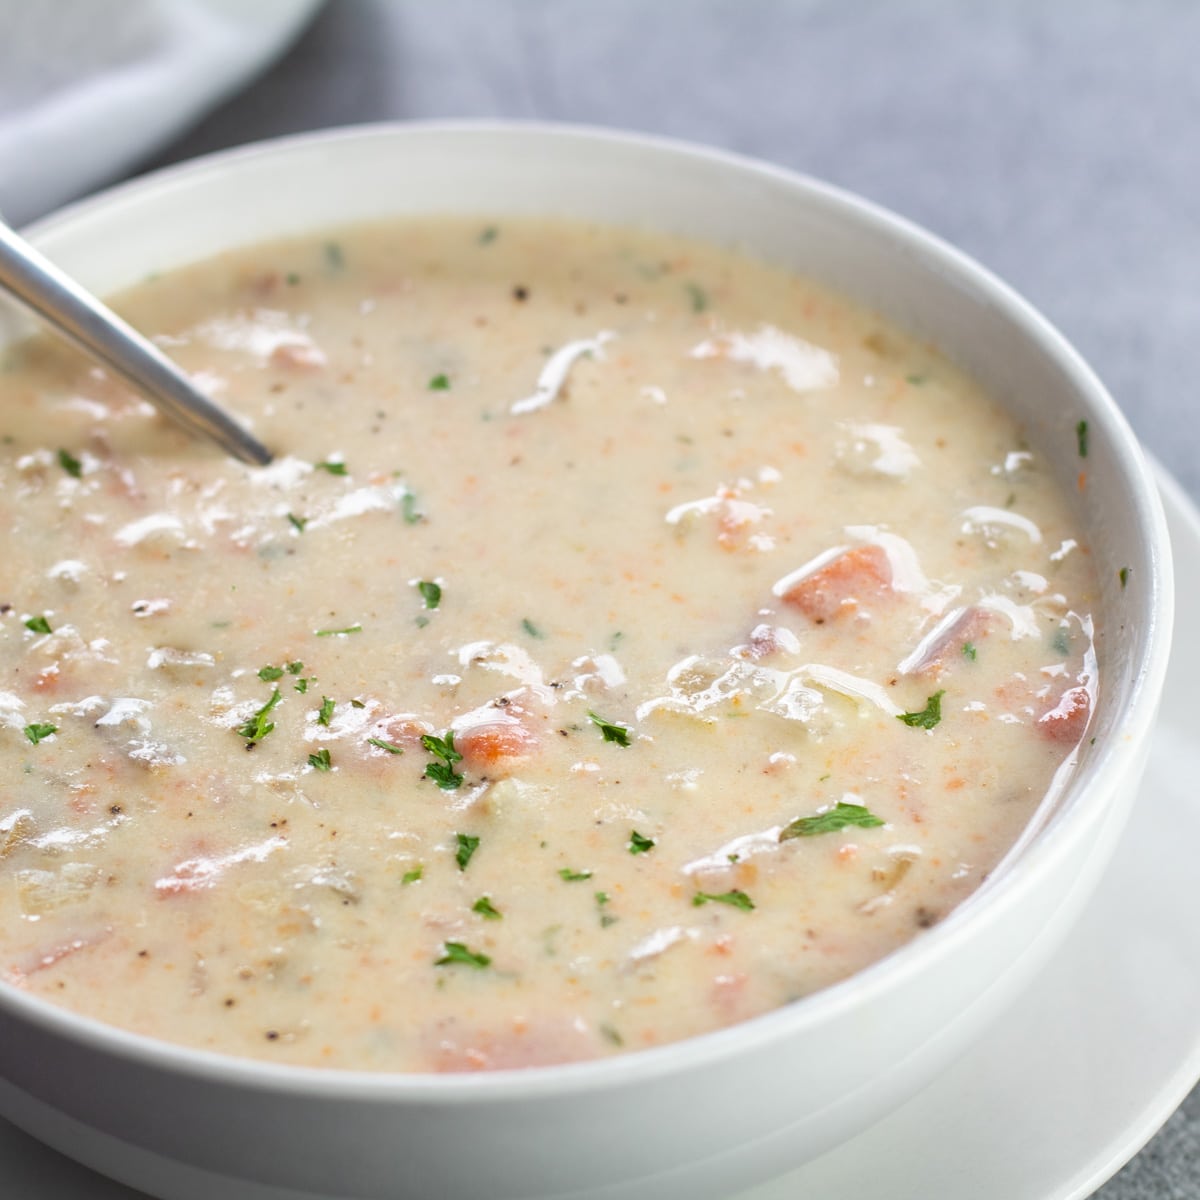 Deliciosa sopa cremosa de patata con jamón crockpot en un tazón blanco con cuchara.